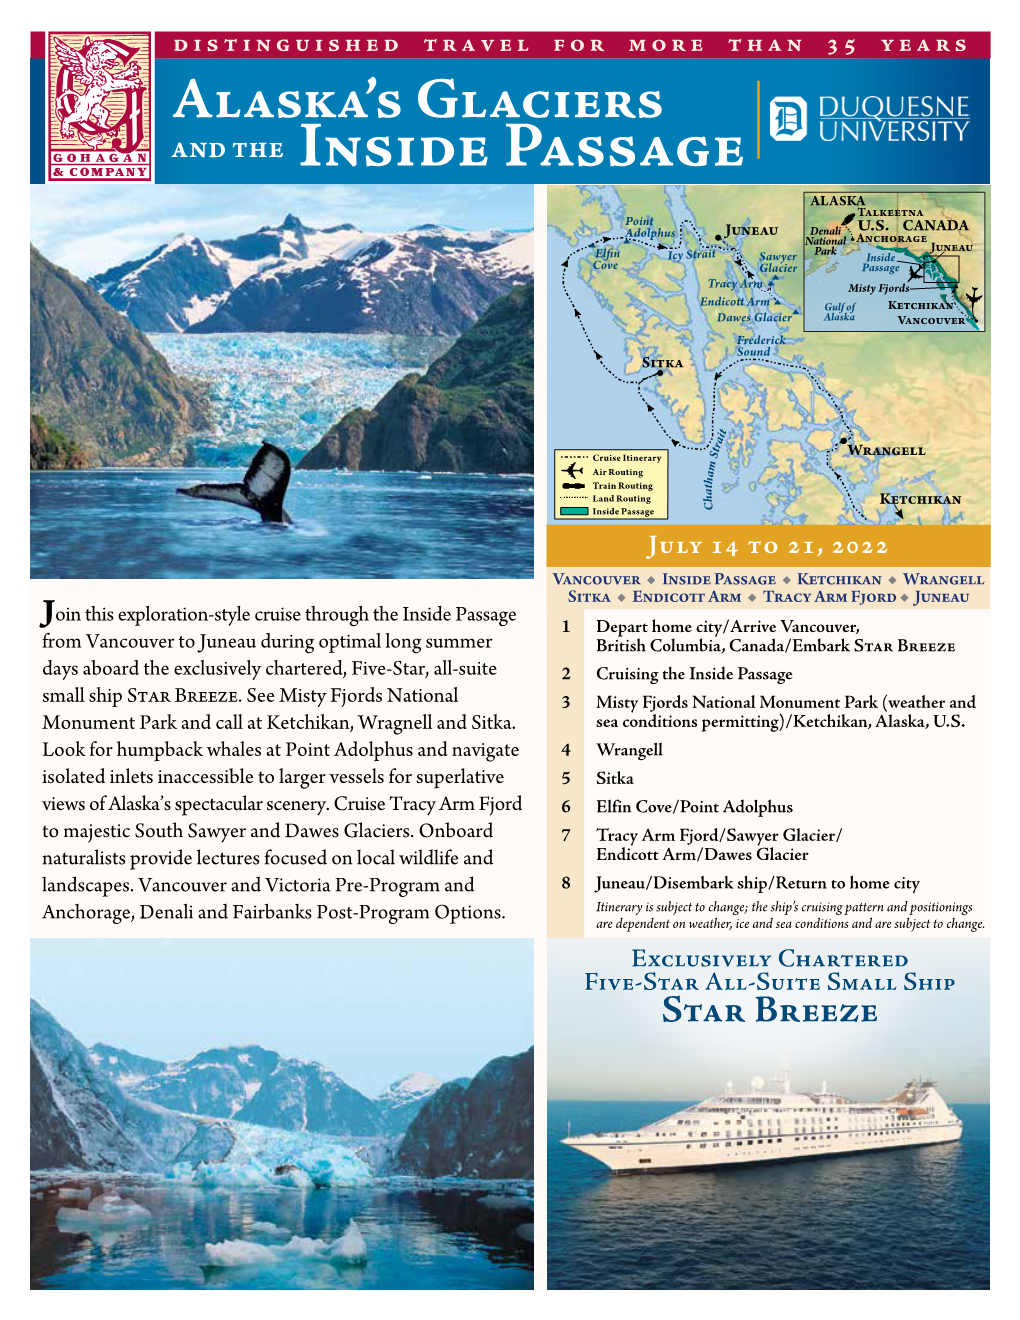 AND the Inside Passage ALASKA Talkeetna Point Adolphus Juneau Denali U.S